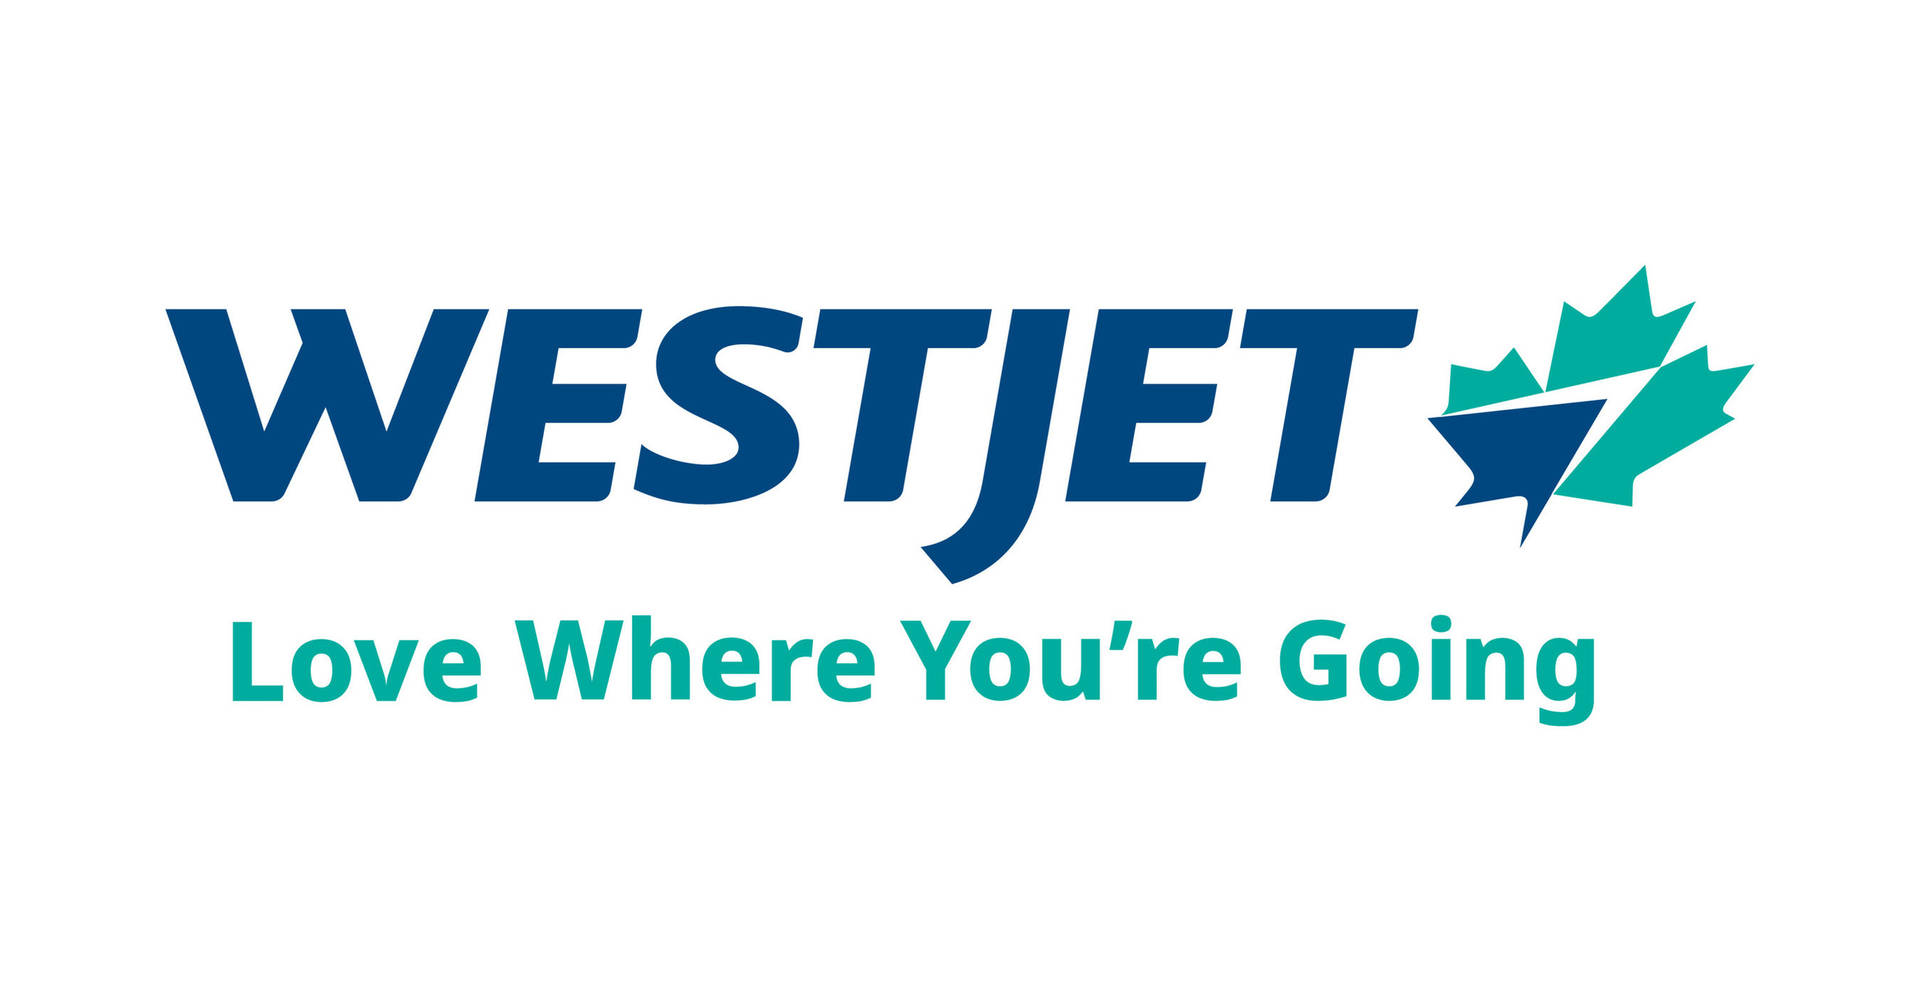 WestJet Airline Tagline Wallpaper